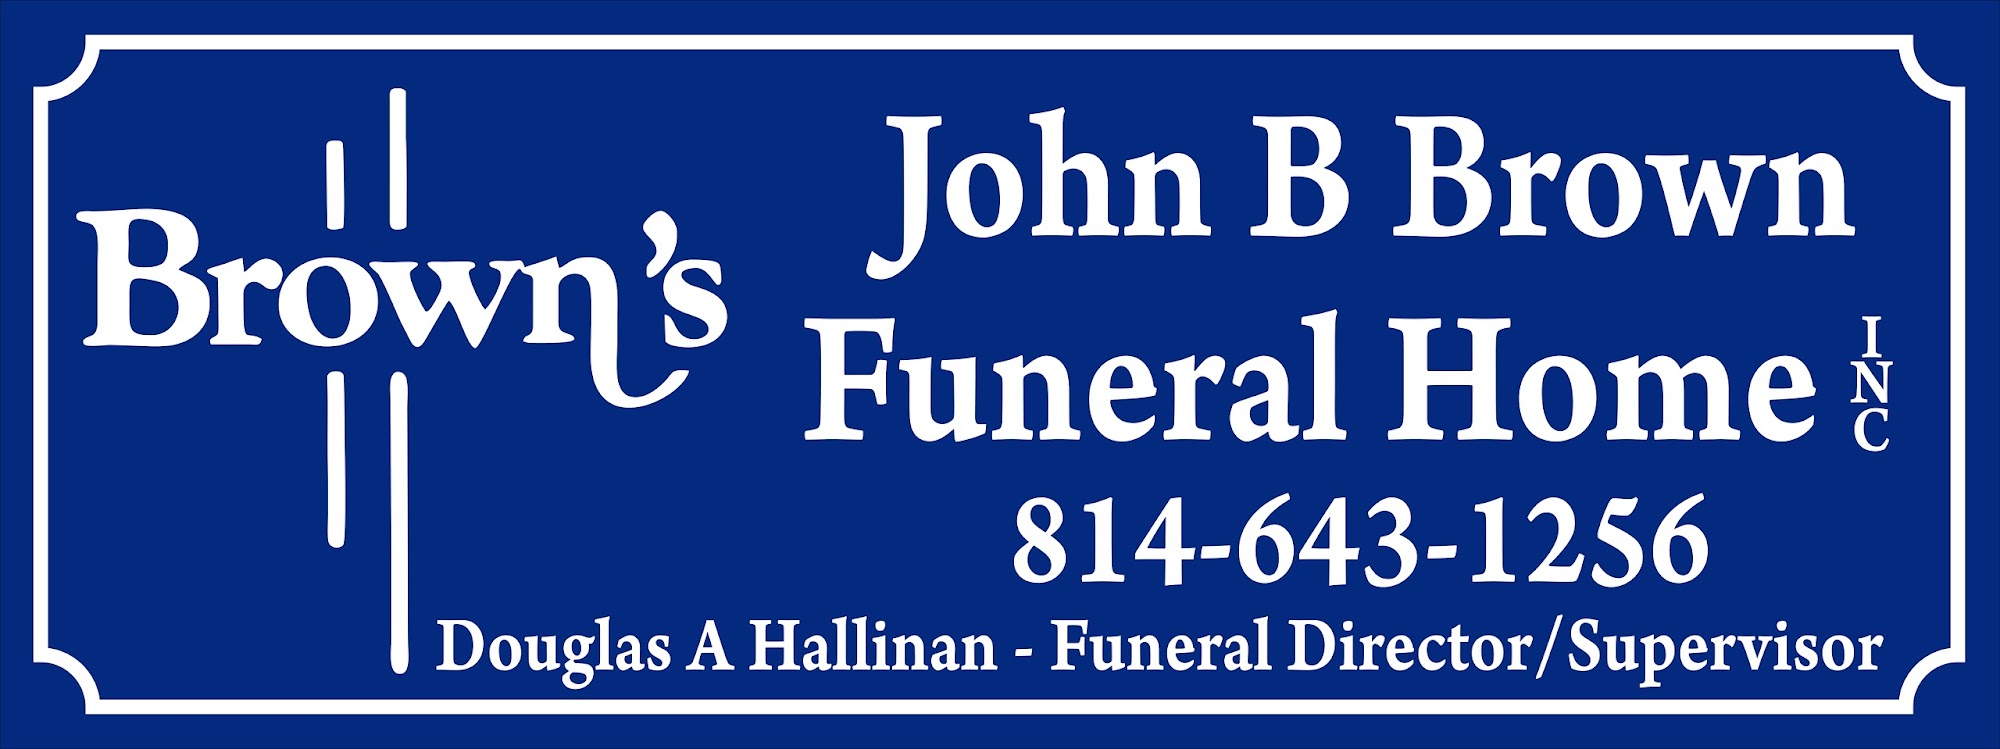 John B. Brown Funeral Home Inc. 417 Washington St, Huntingdon Pennsylvania 16652